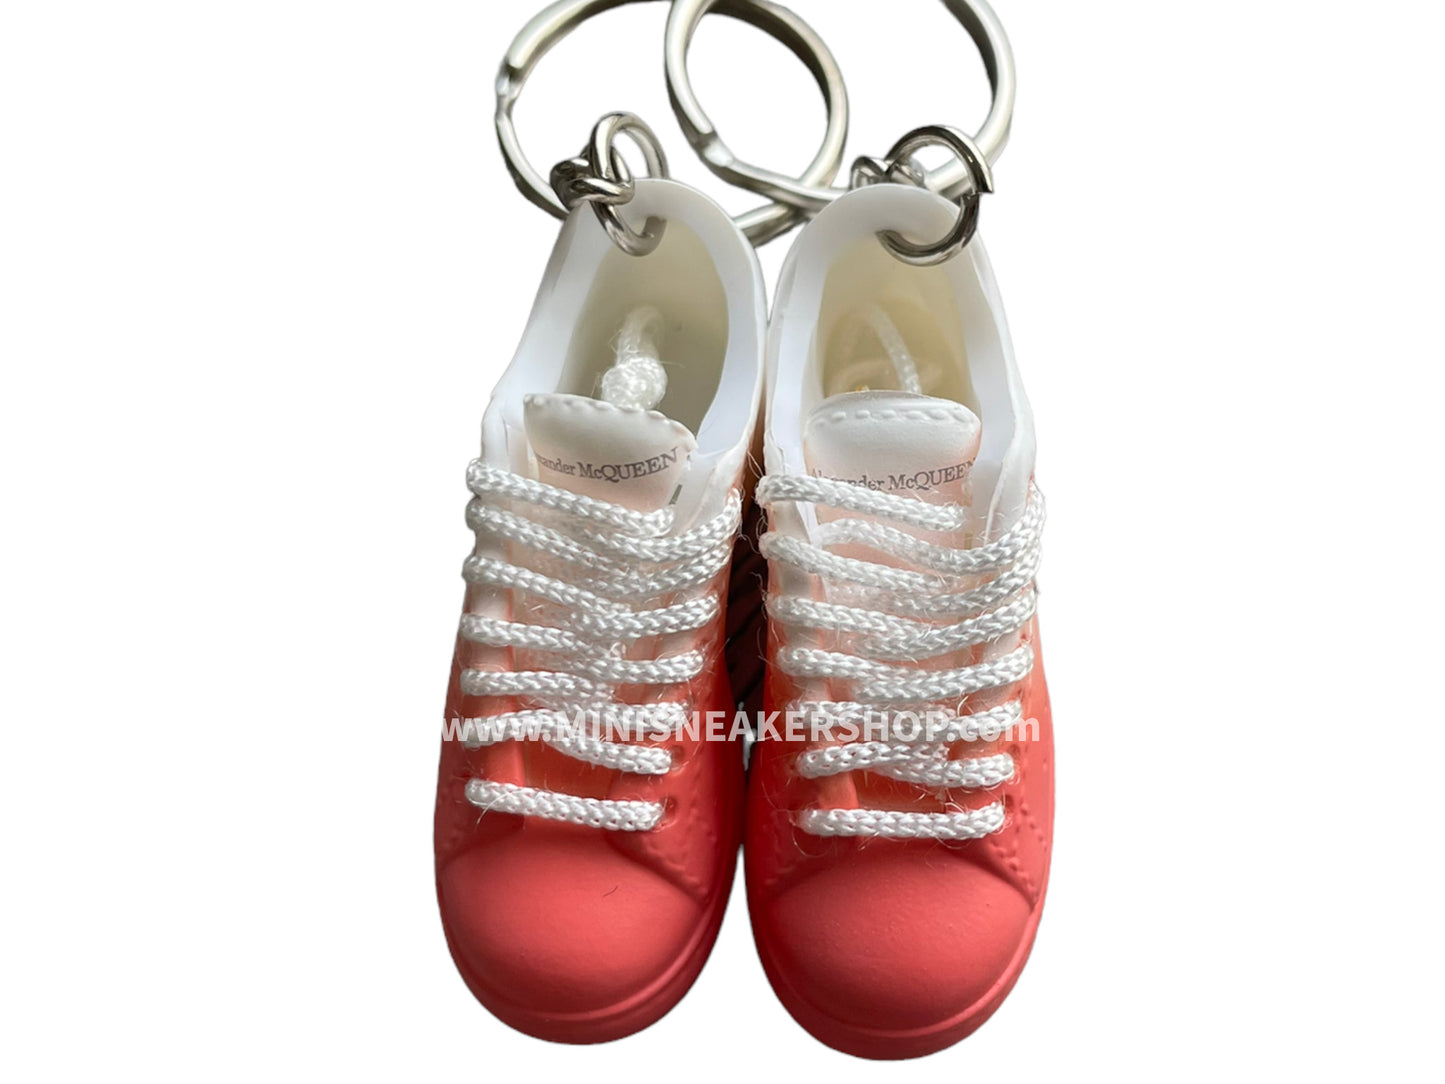 Mini sneaker keychain 3D - Alexander Mc Queen Coral fade